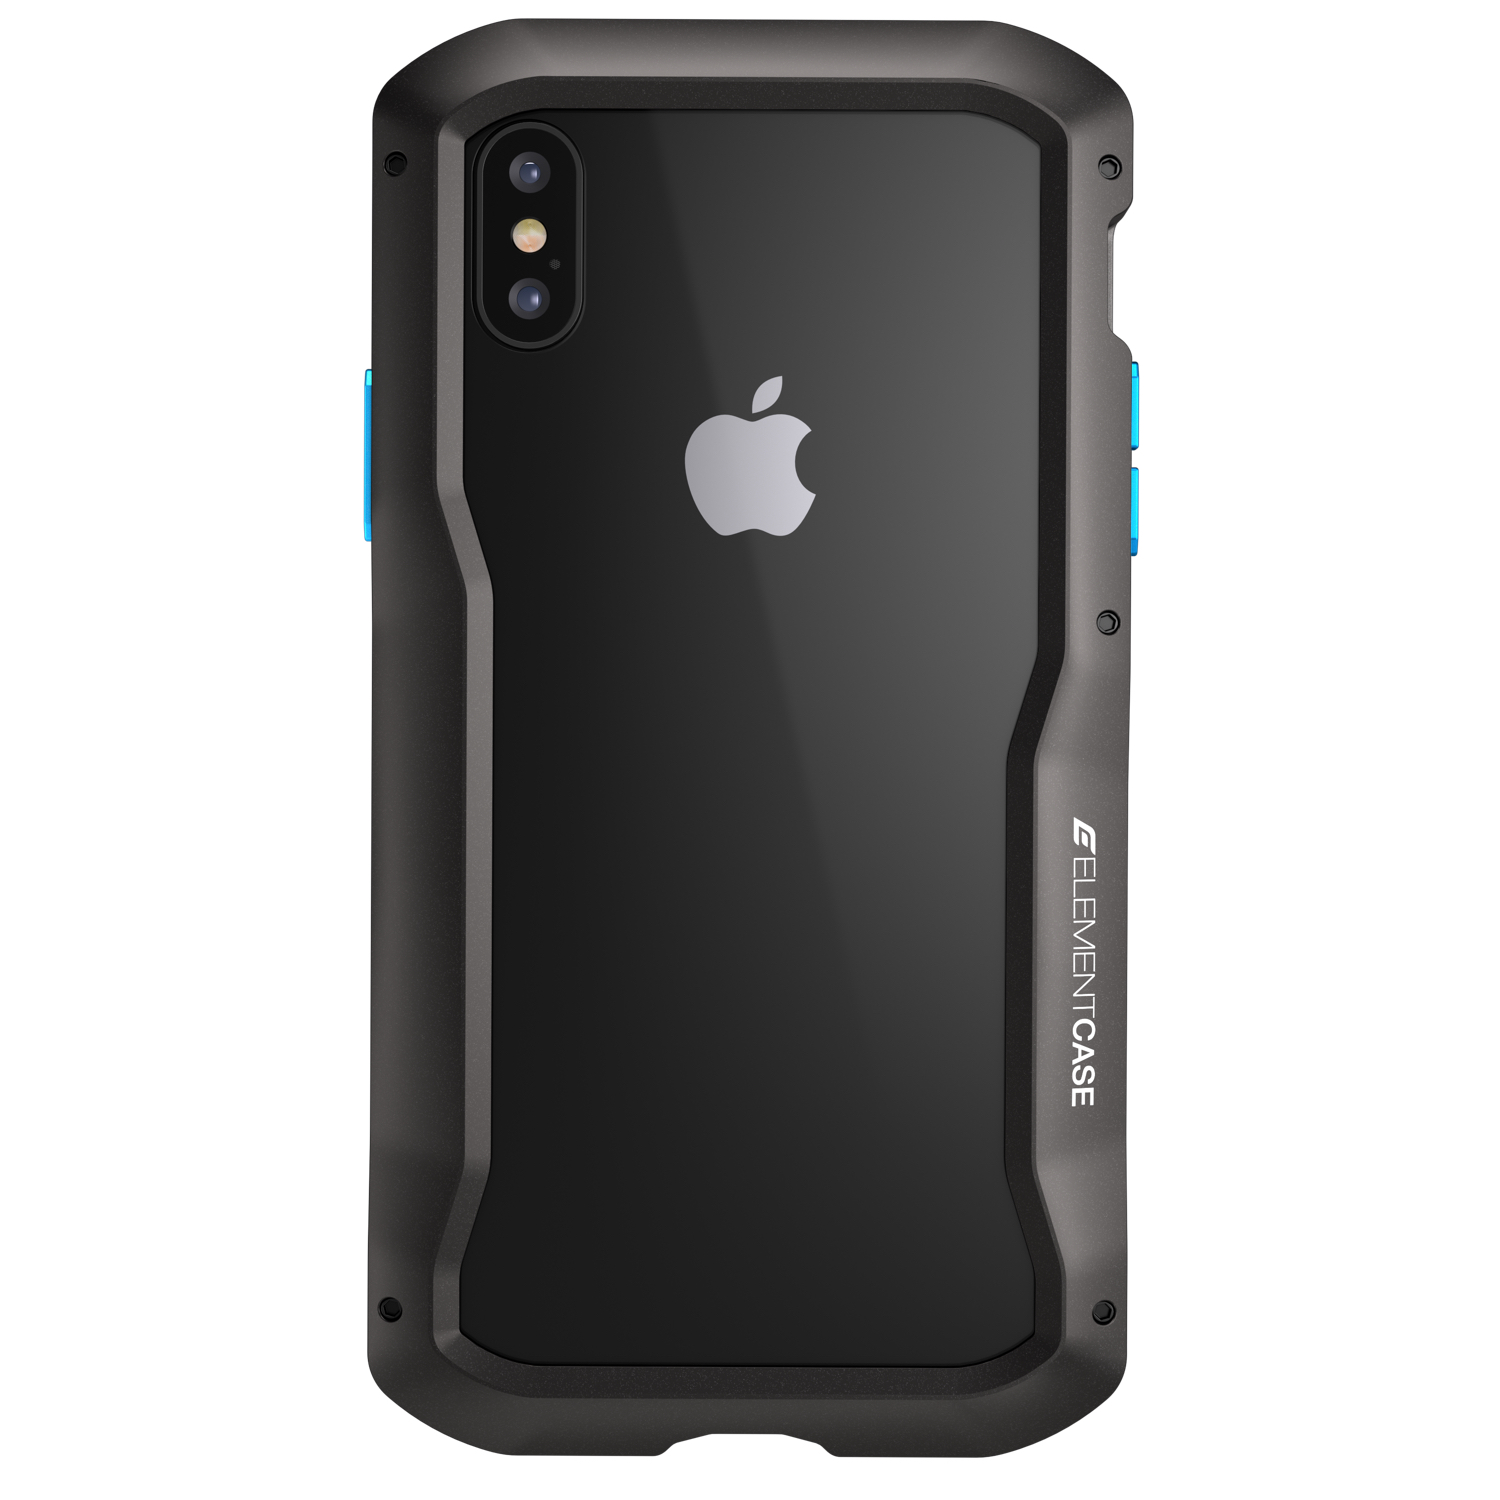 Element Case Vapor-S for iPhone XS MAX